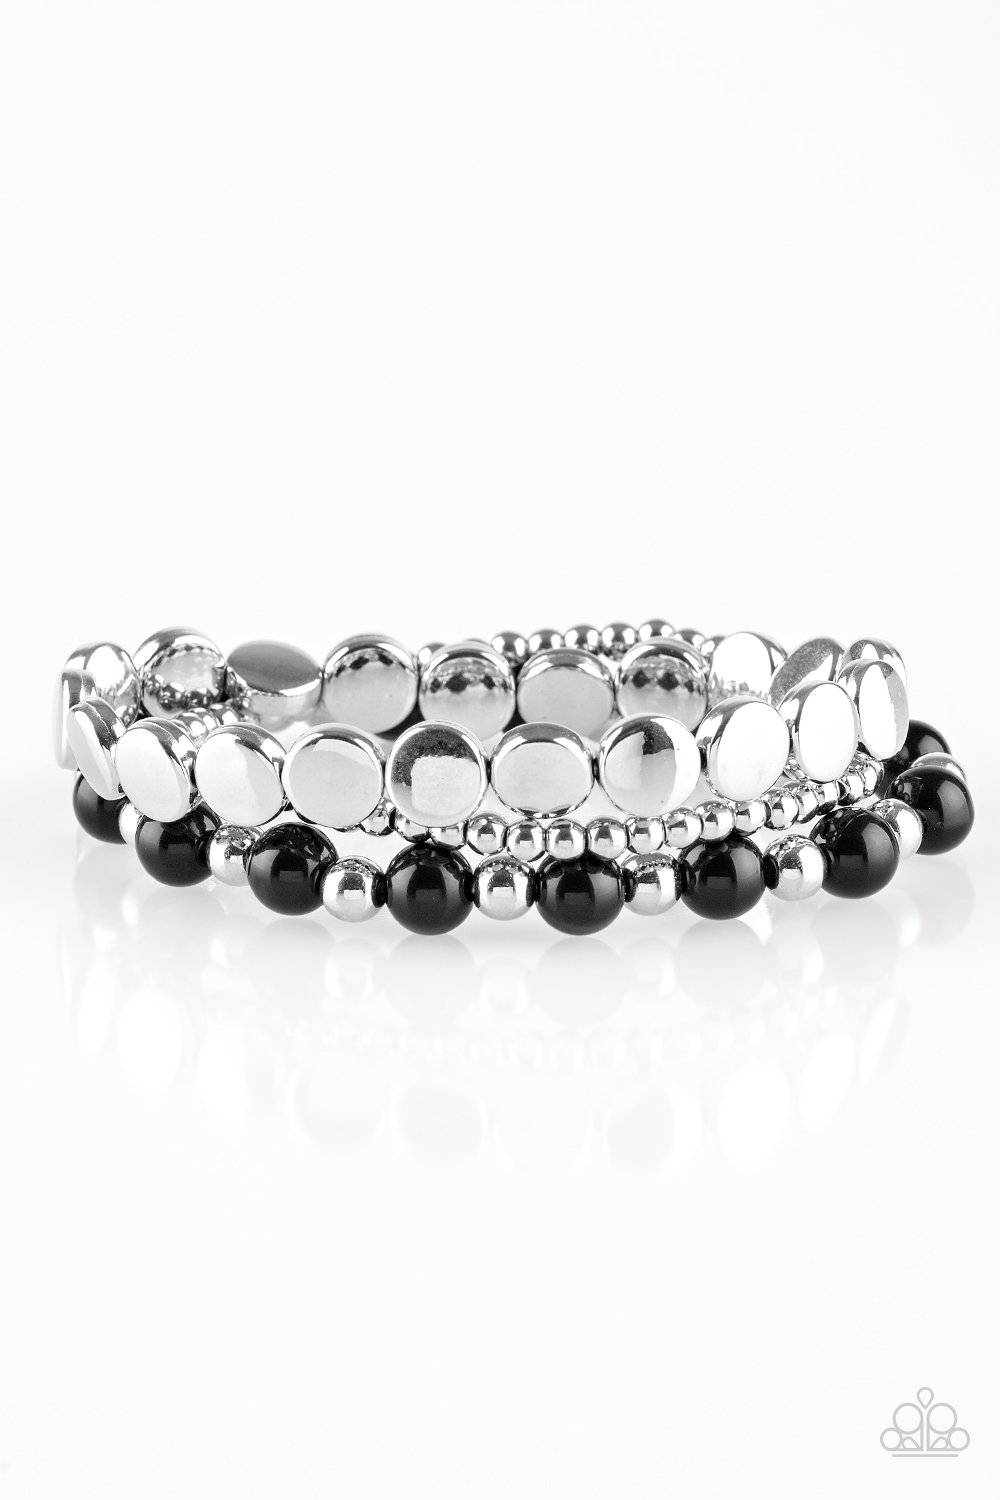 Girly Girl Glamour Black Bracelet - Paparazzi Accessories - GlaMarous Titi Jewels